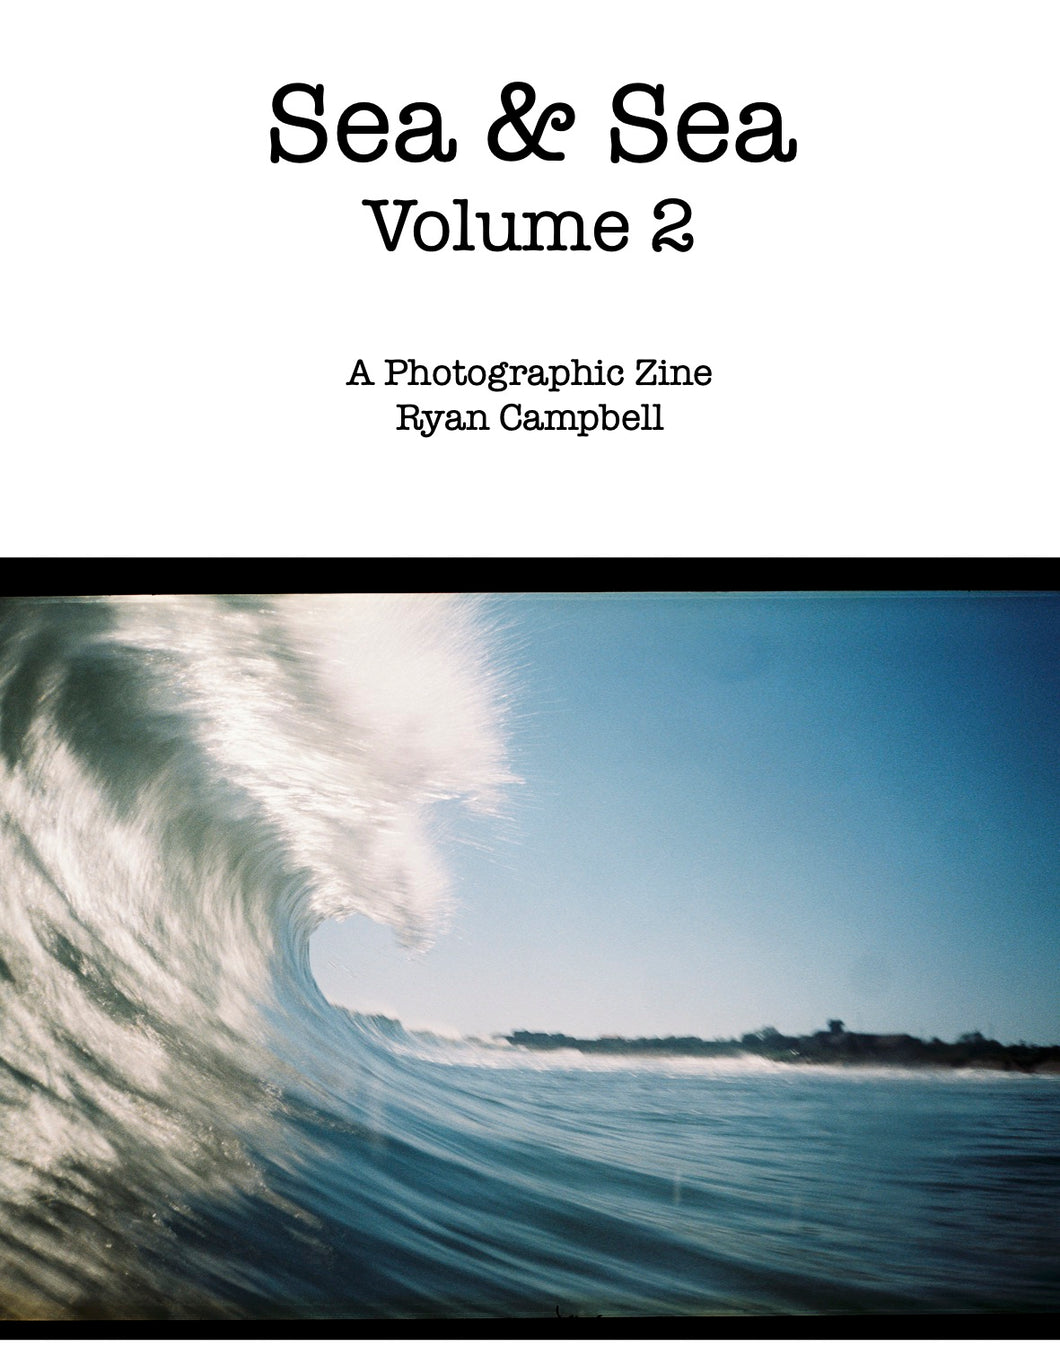 Sea & Sea Magazine Volume 2 - Ryan Campbell